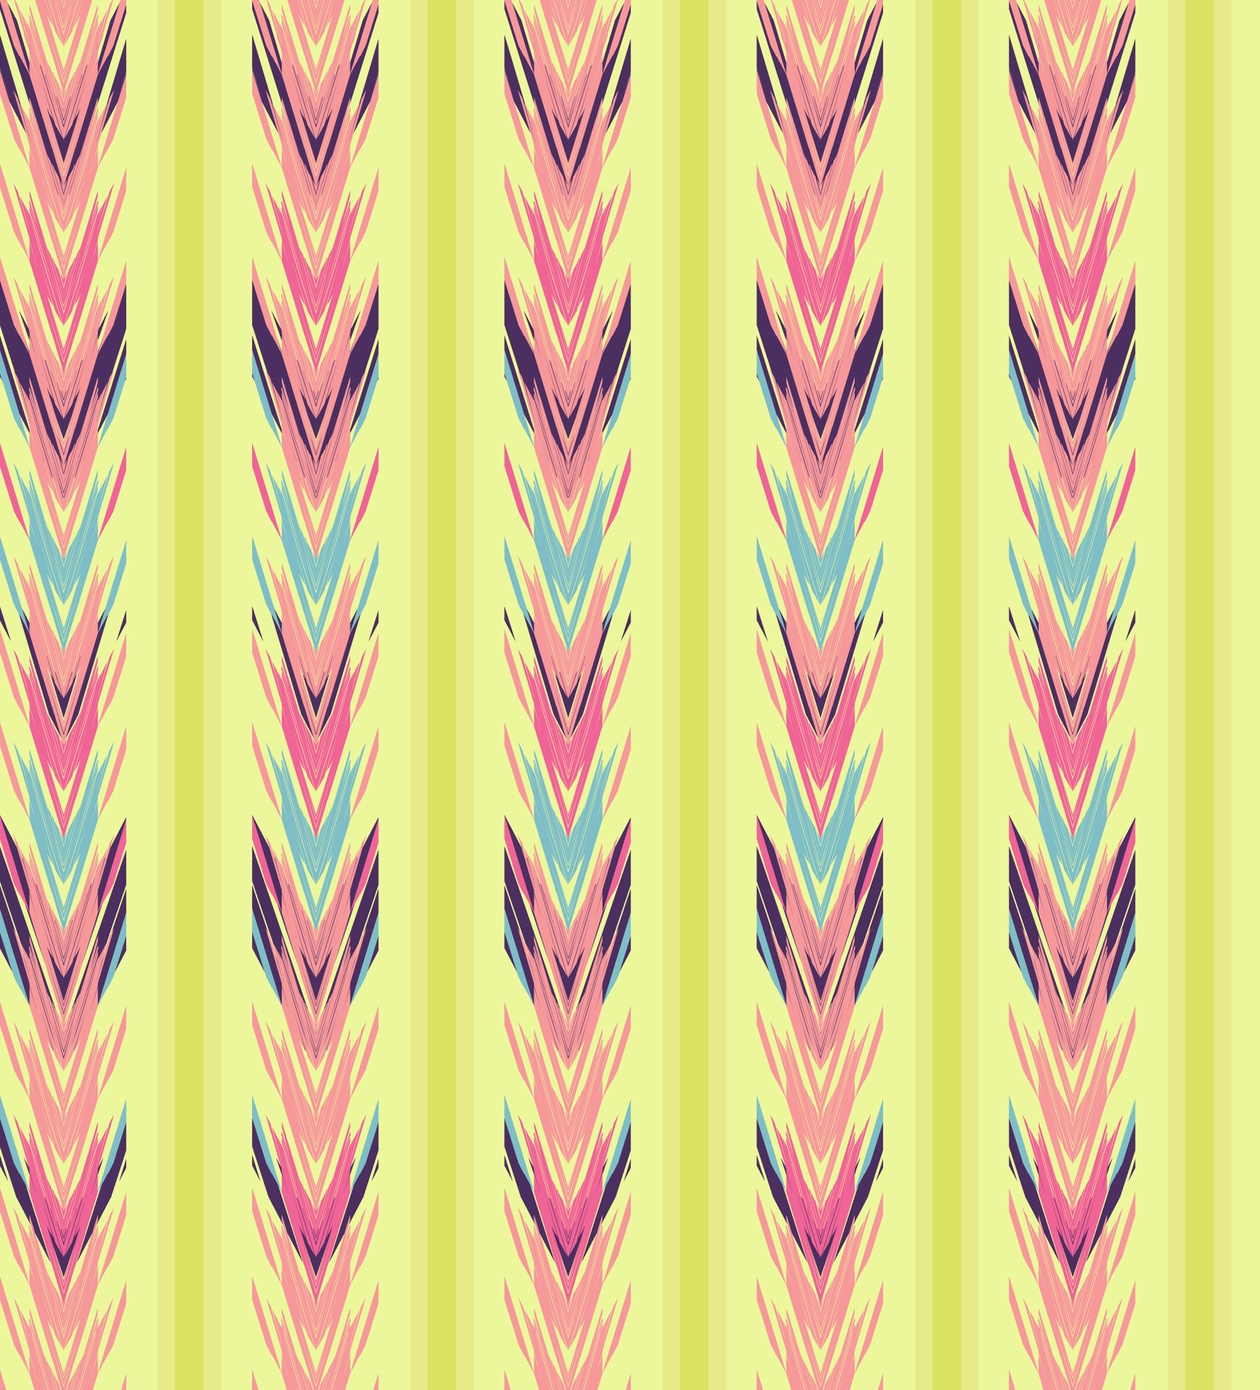 Ethnic seamless striped pattern Photoshop brush